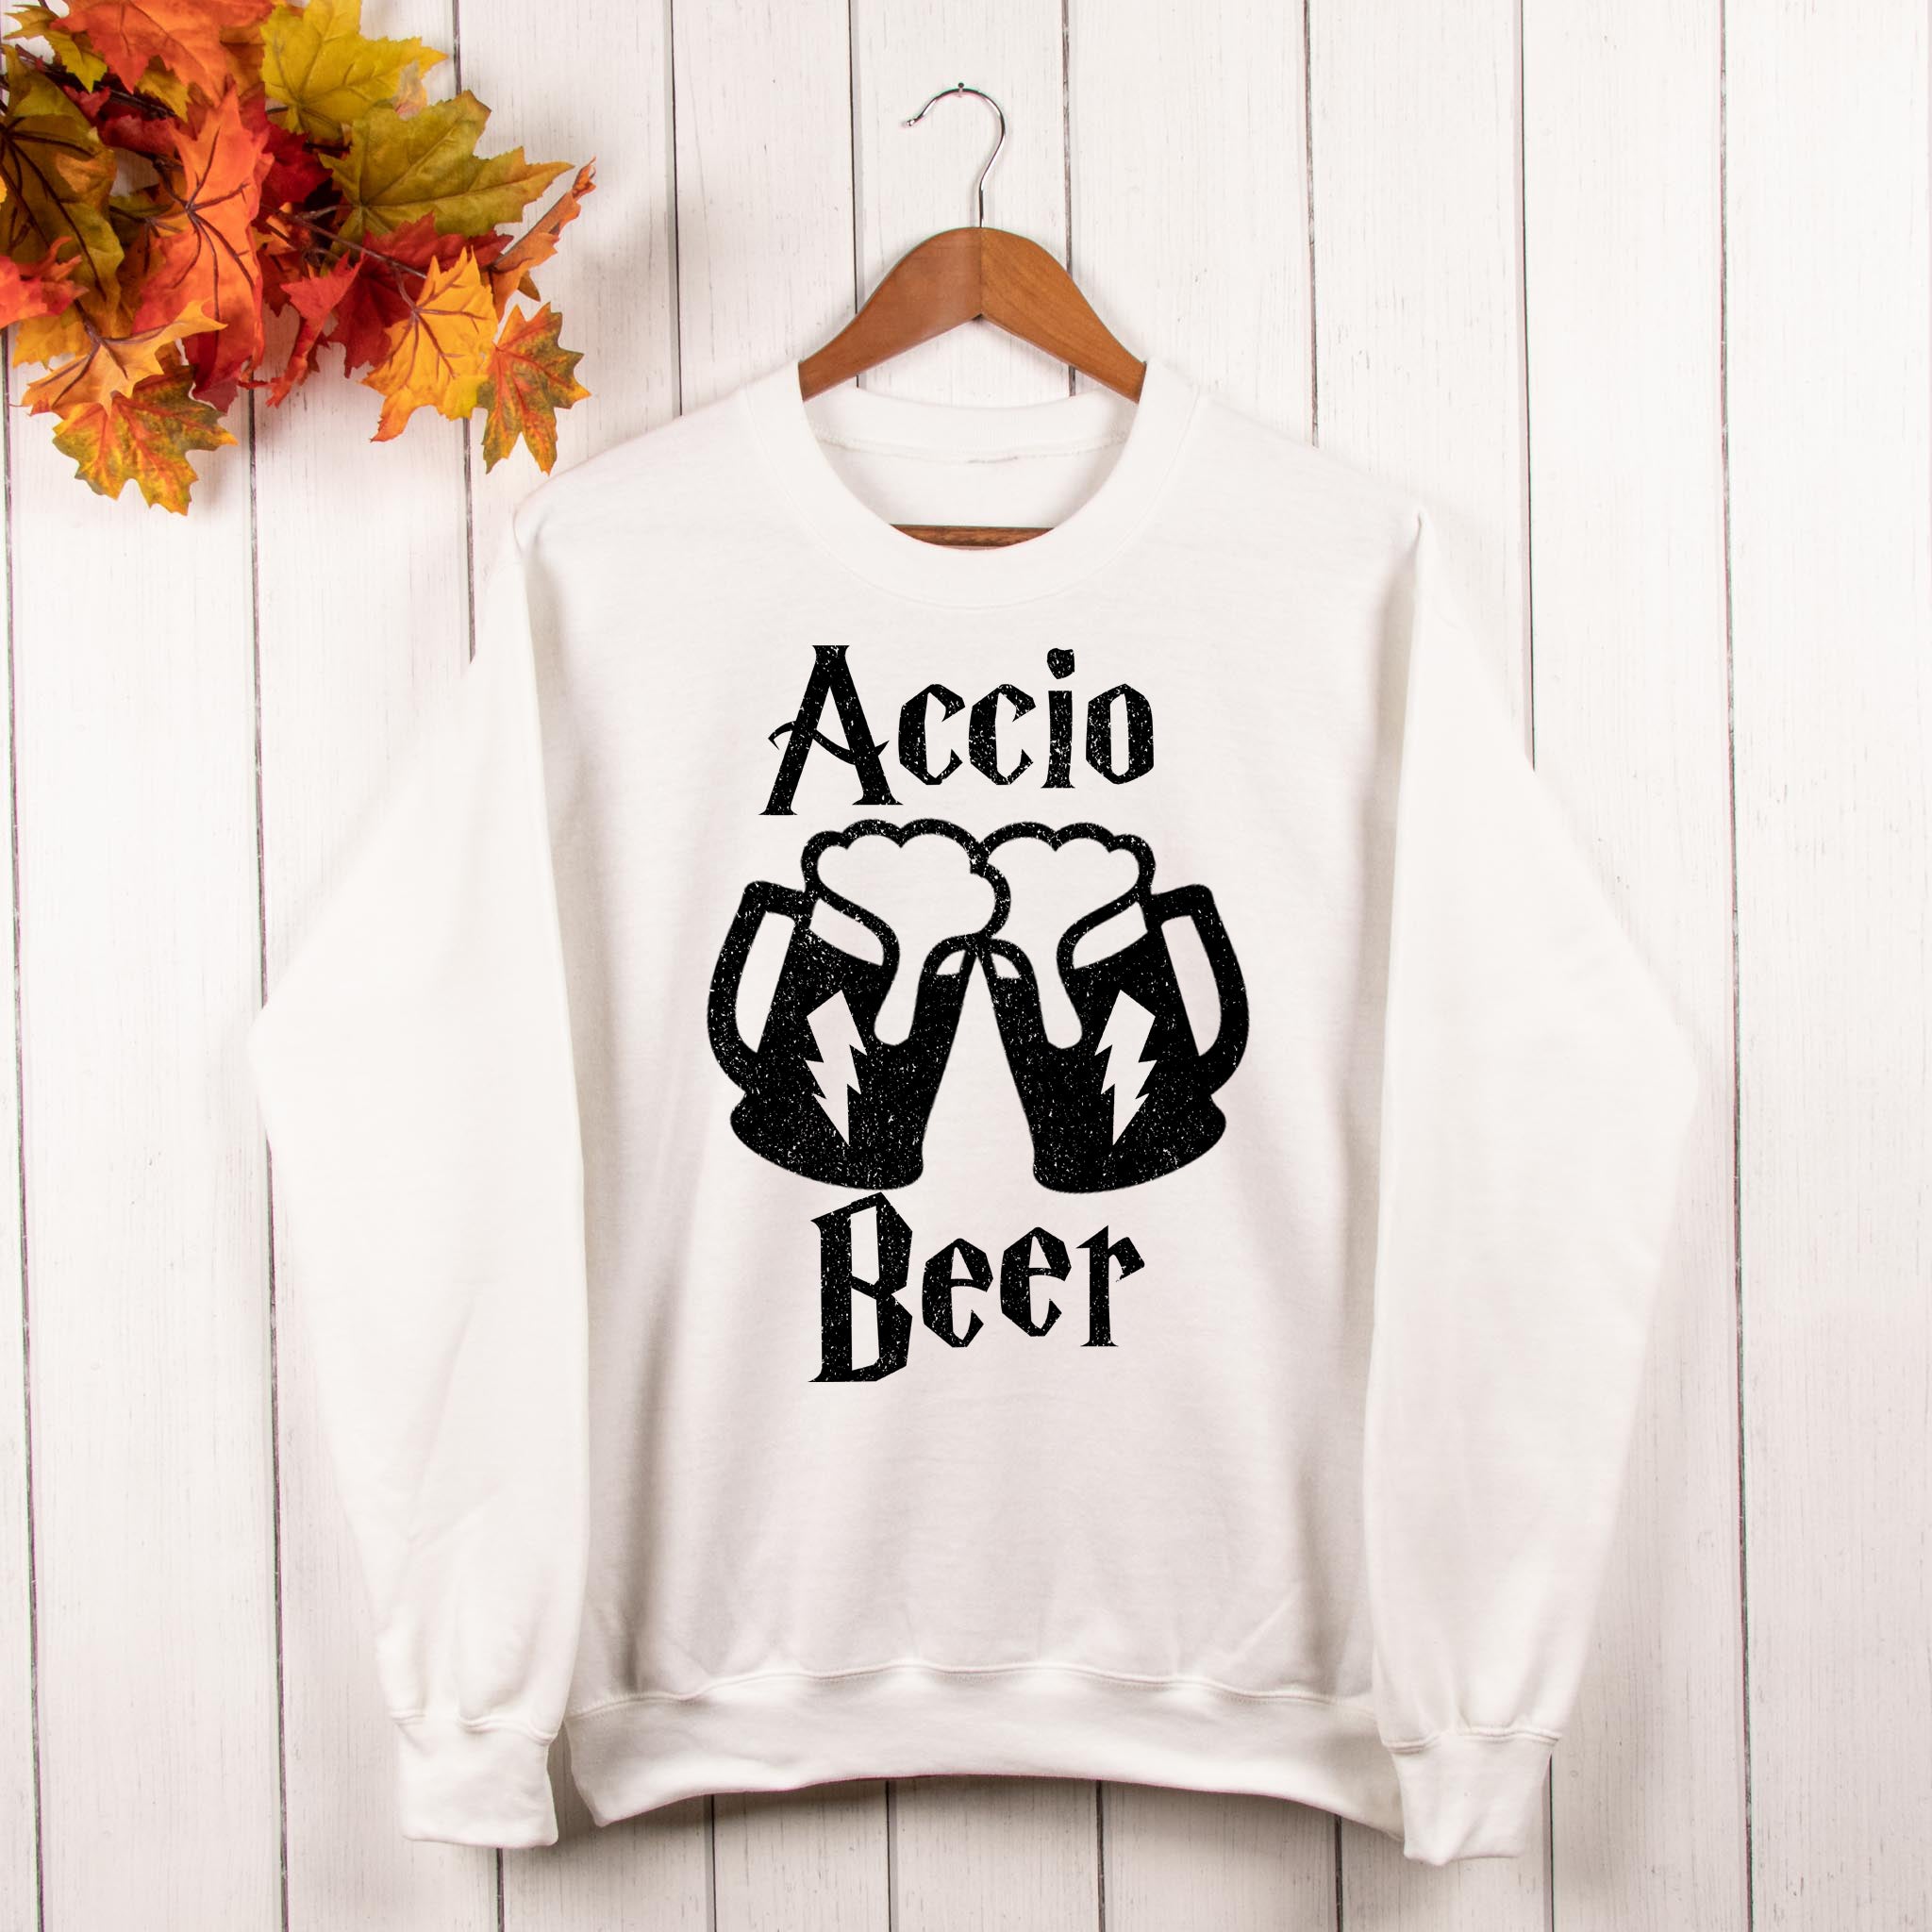 white sweater that says accio beer - HighCiti